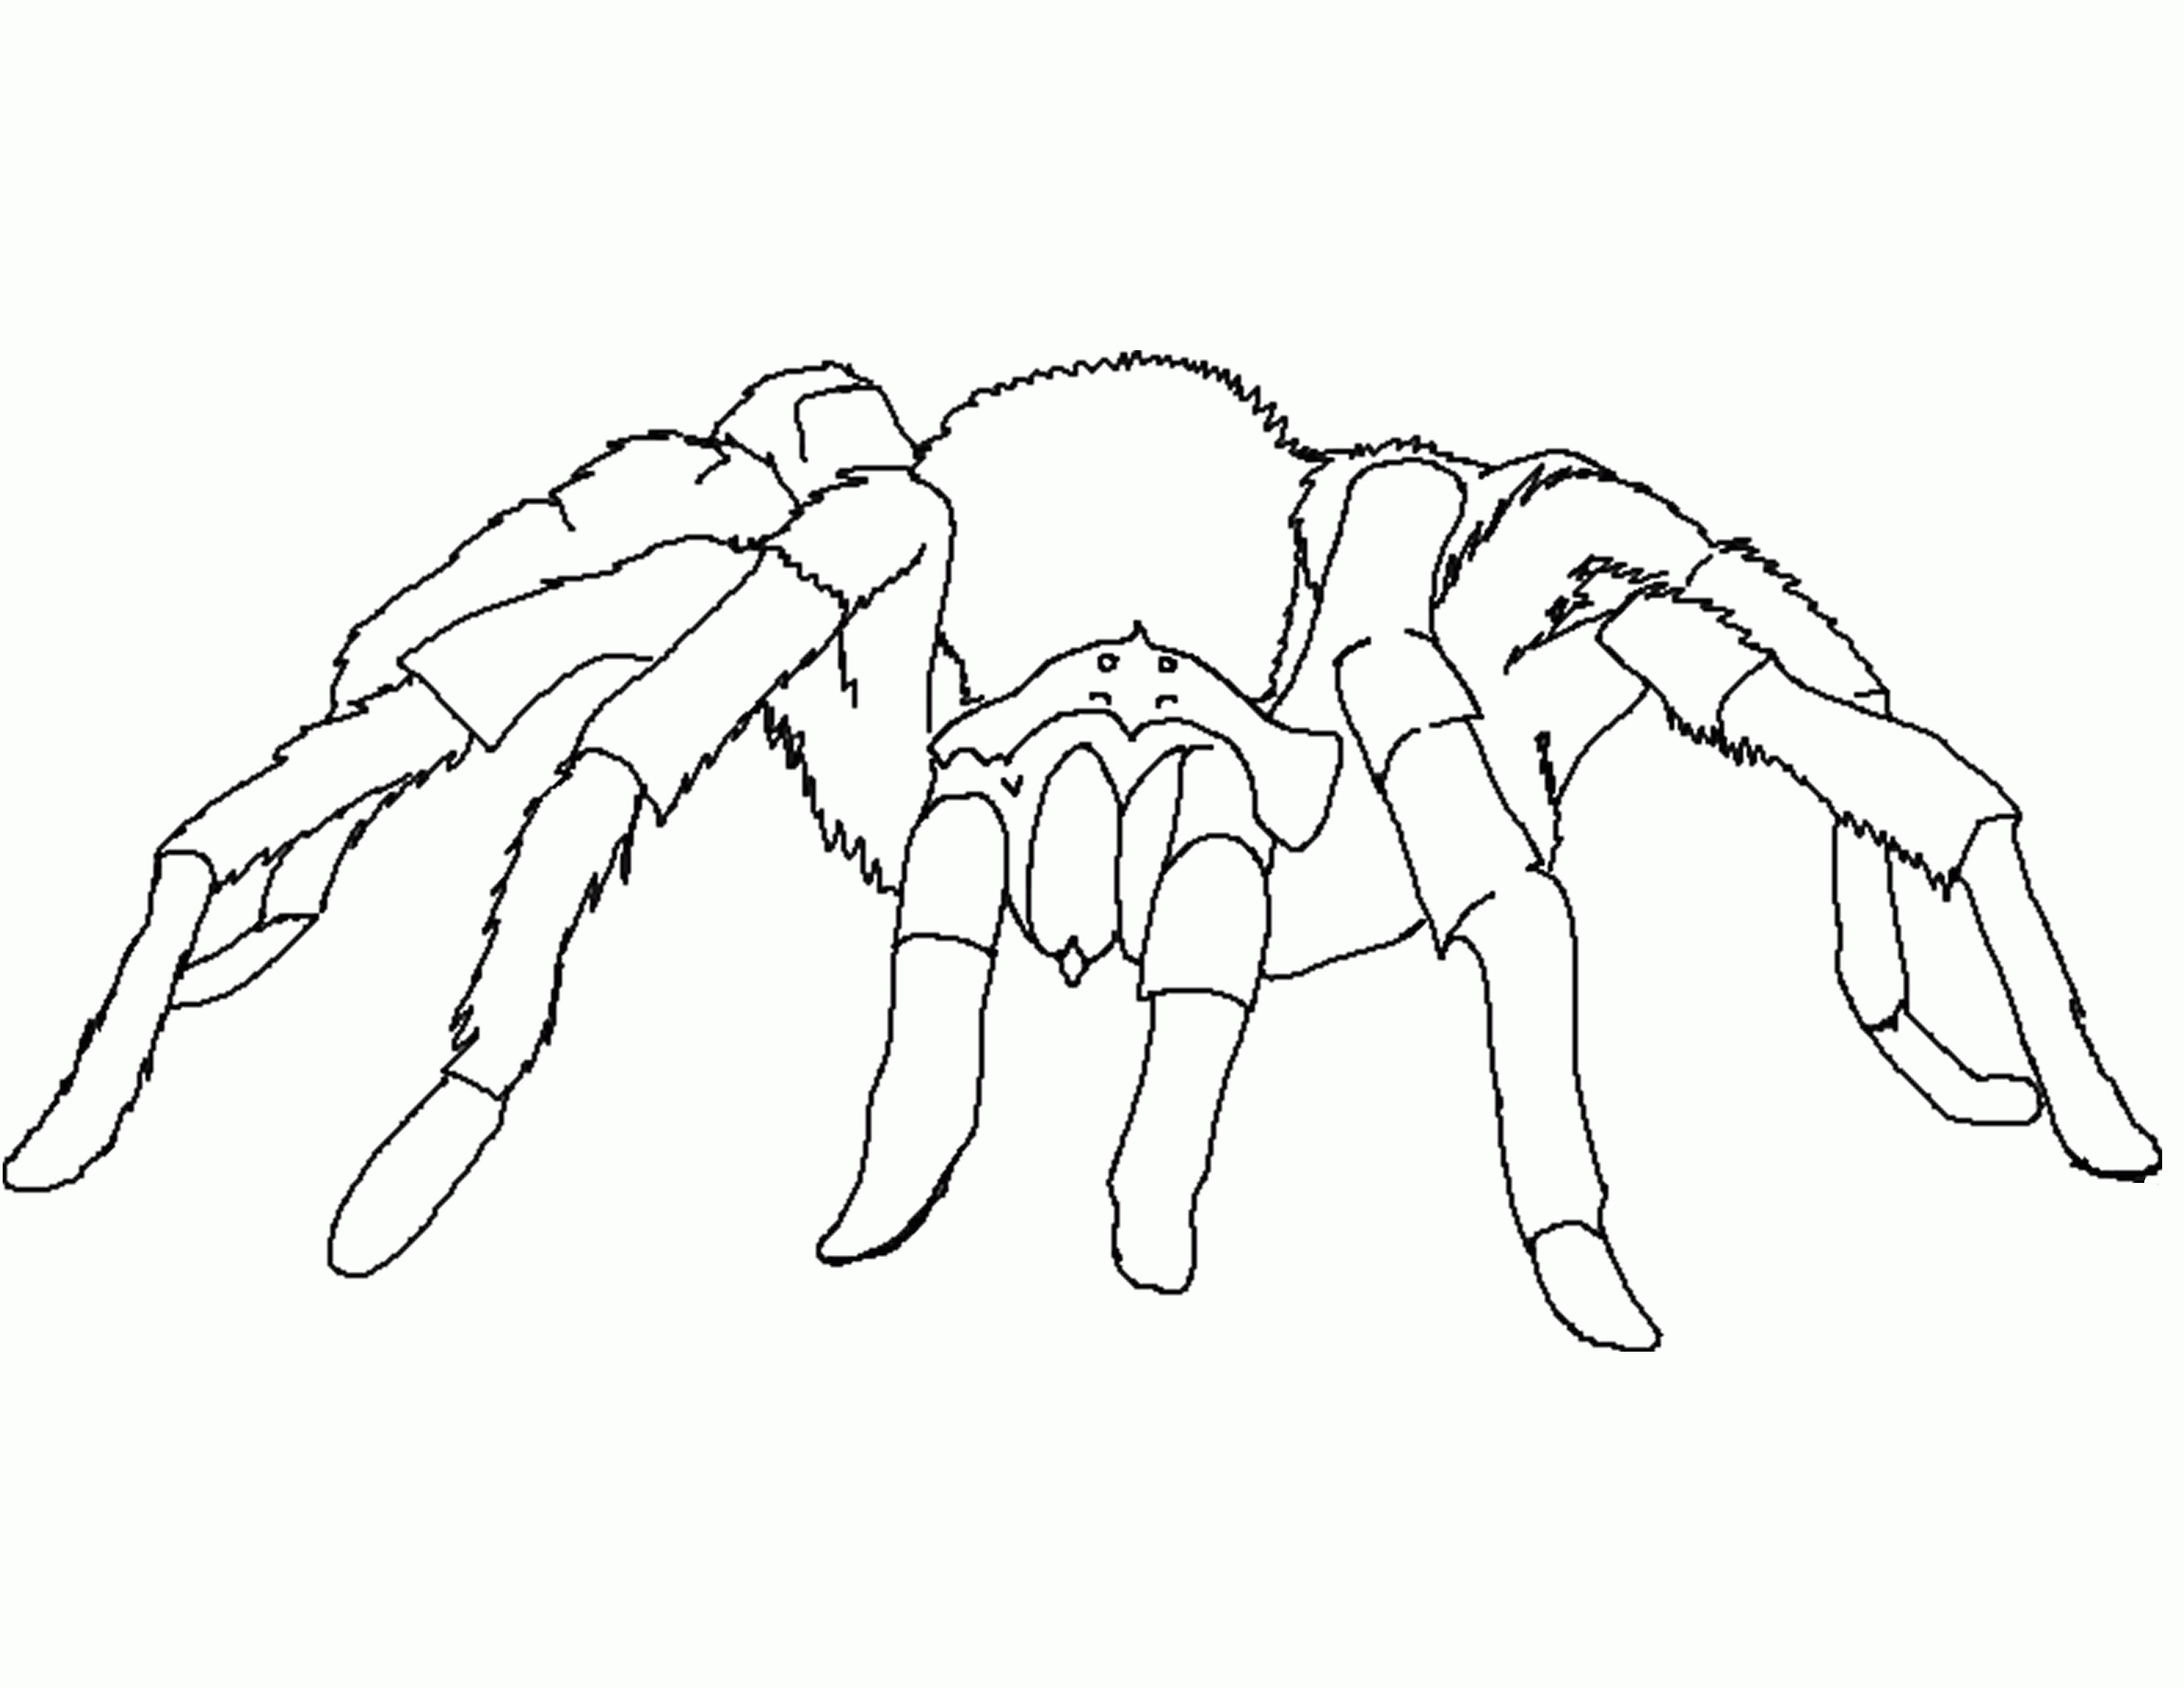 Black Widow Spider Coloring Page - HiColoringPages